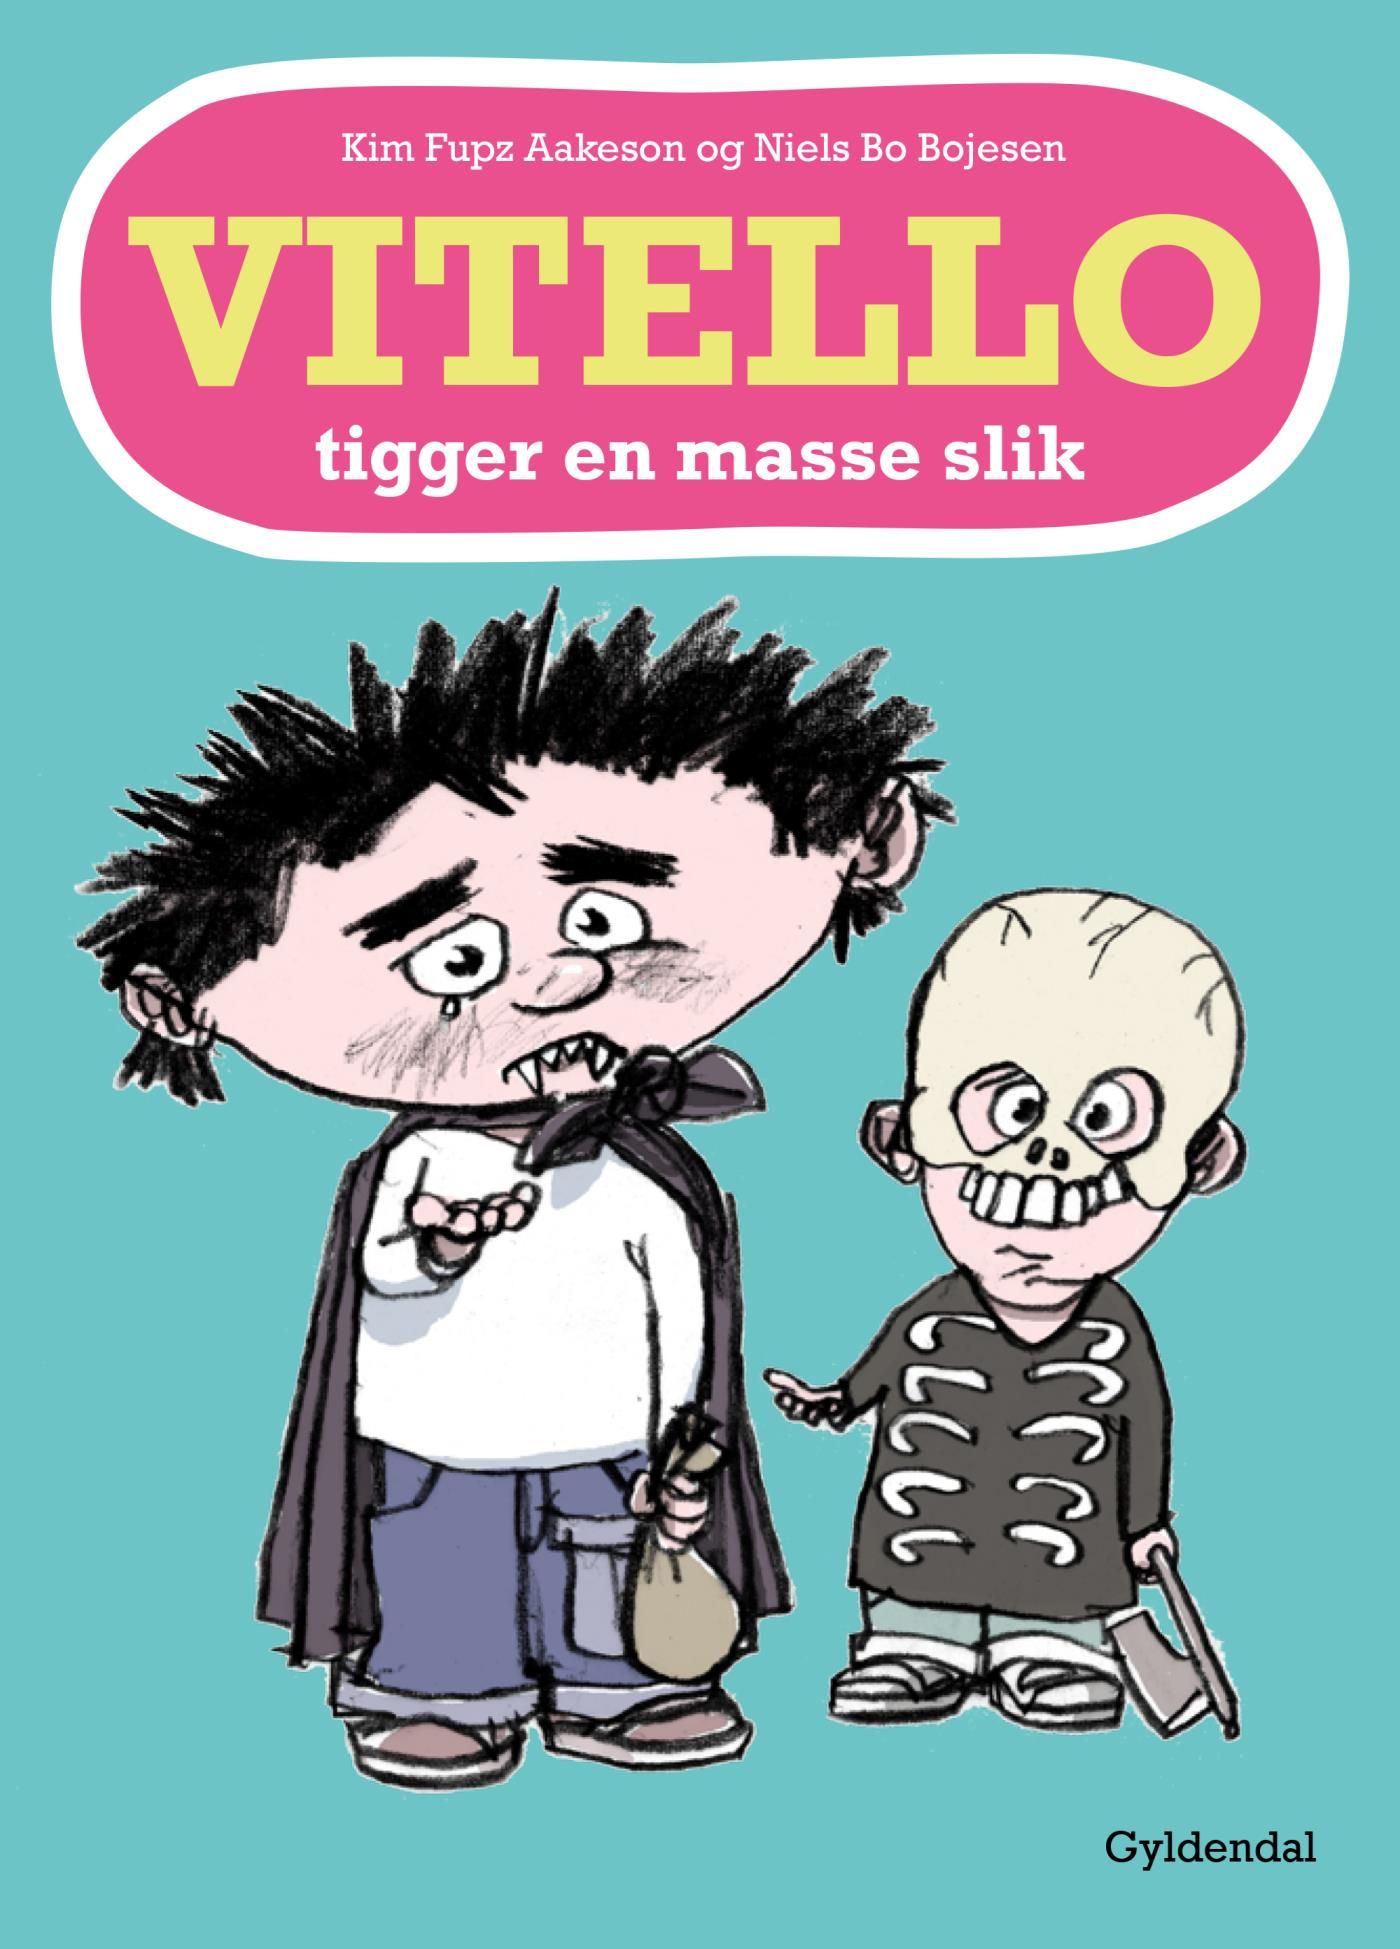 Vitello tigger en masse slik - Lyt&læs, eBook by Niels Bo Bojesen, Kim Fupz Aakeson